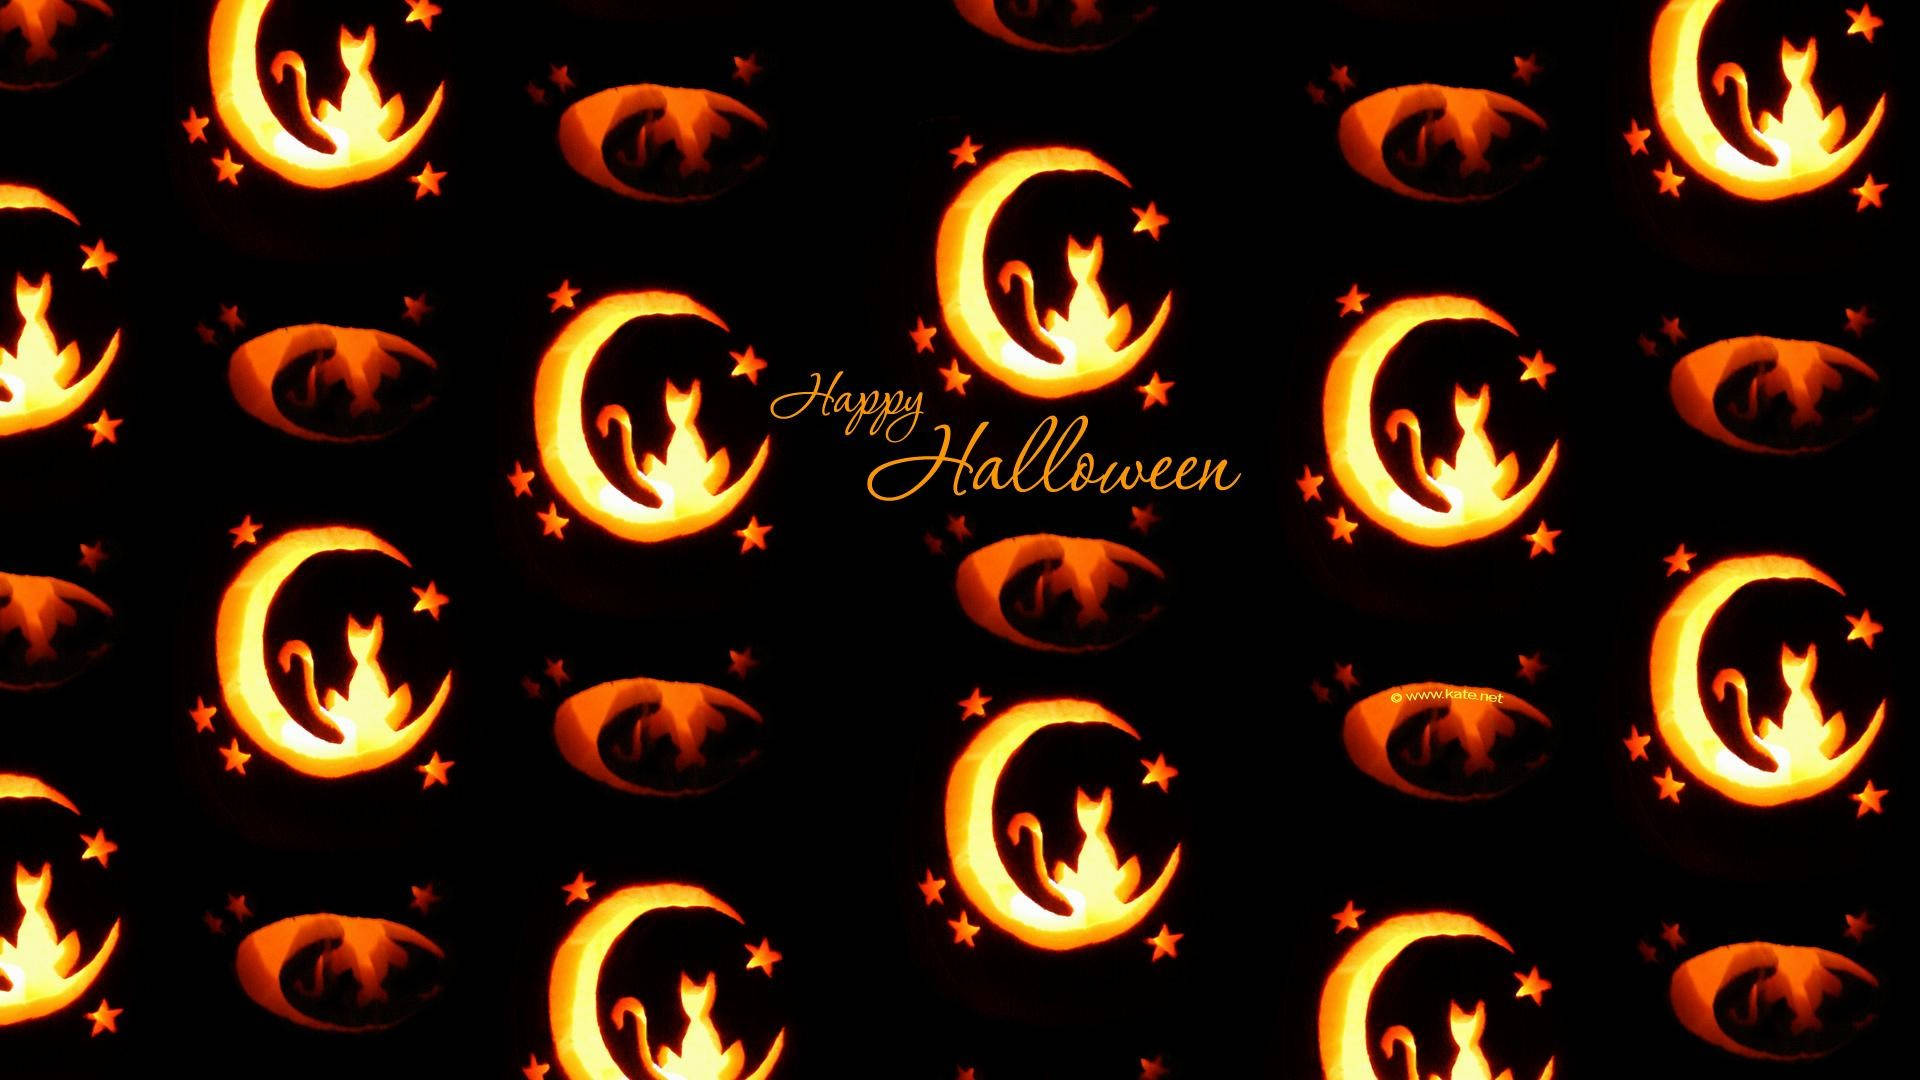 Cat Lovers' Cute Halloween Desktop Wallpaper